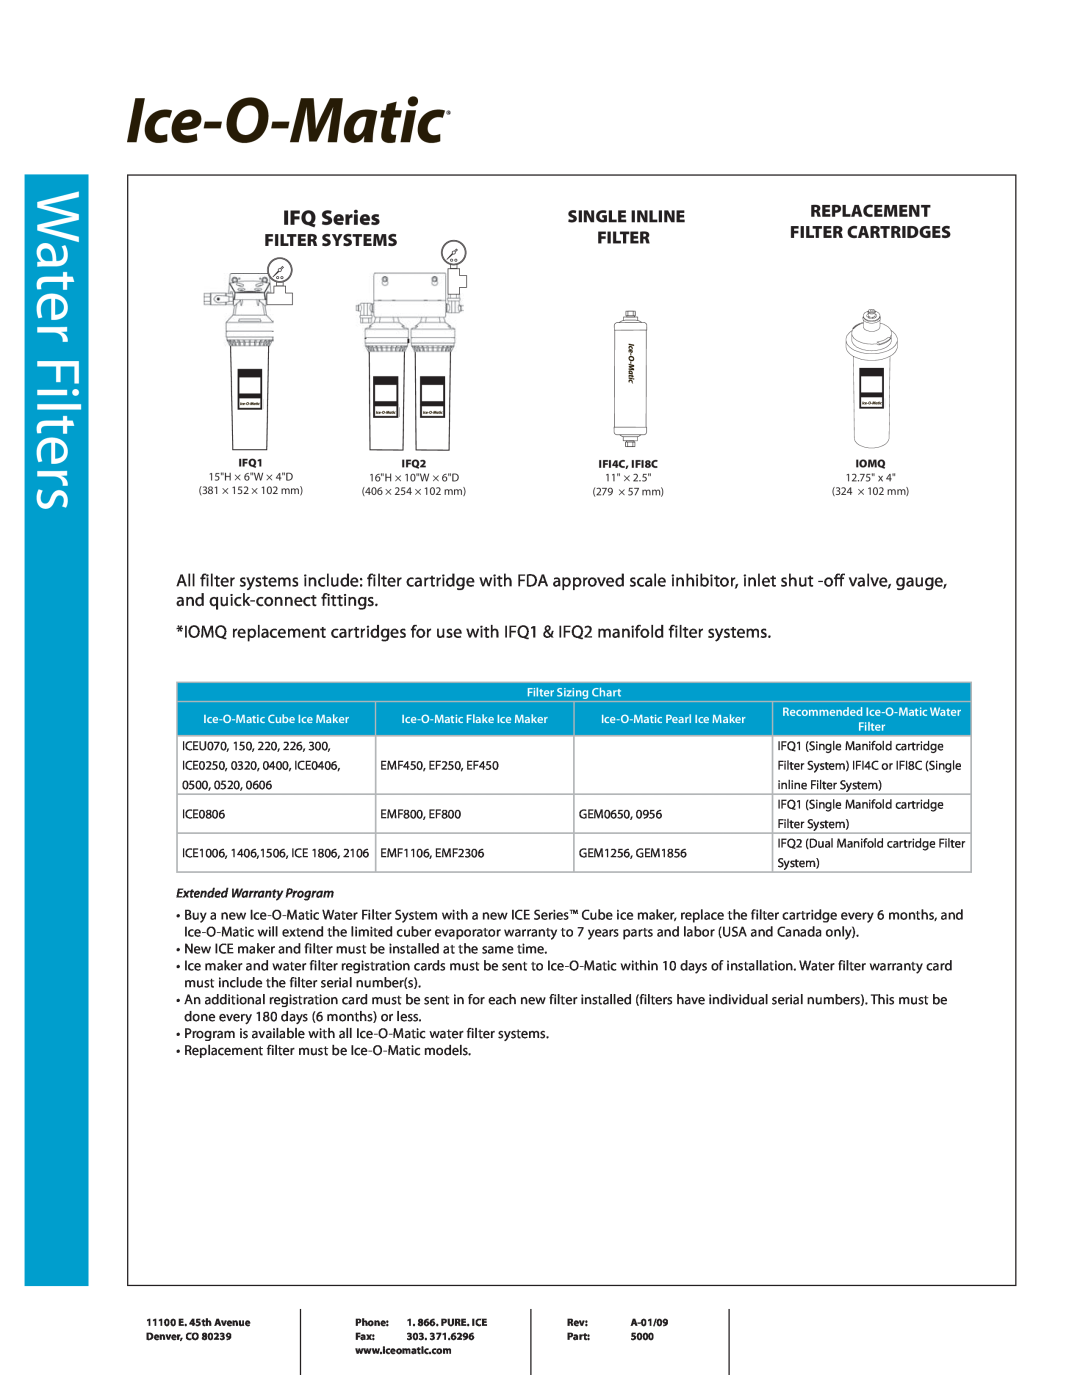 Ice-O-Matic IFQ1, IFQ2, IFI8C, IFI4C manual Water Filters, IFQ Series, Single Inline 